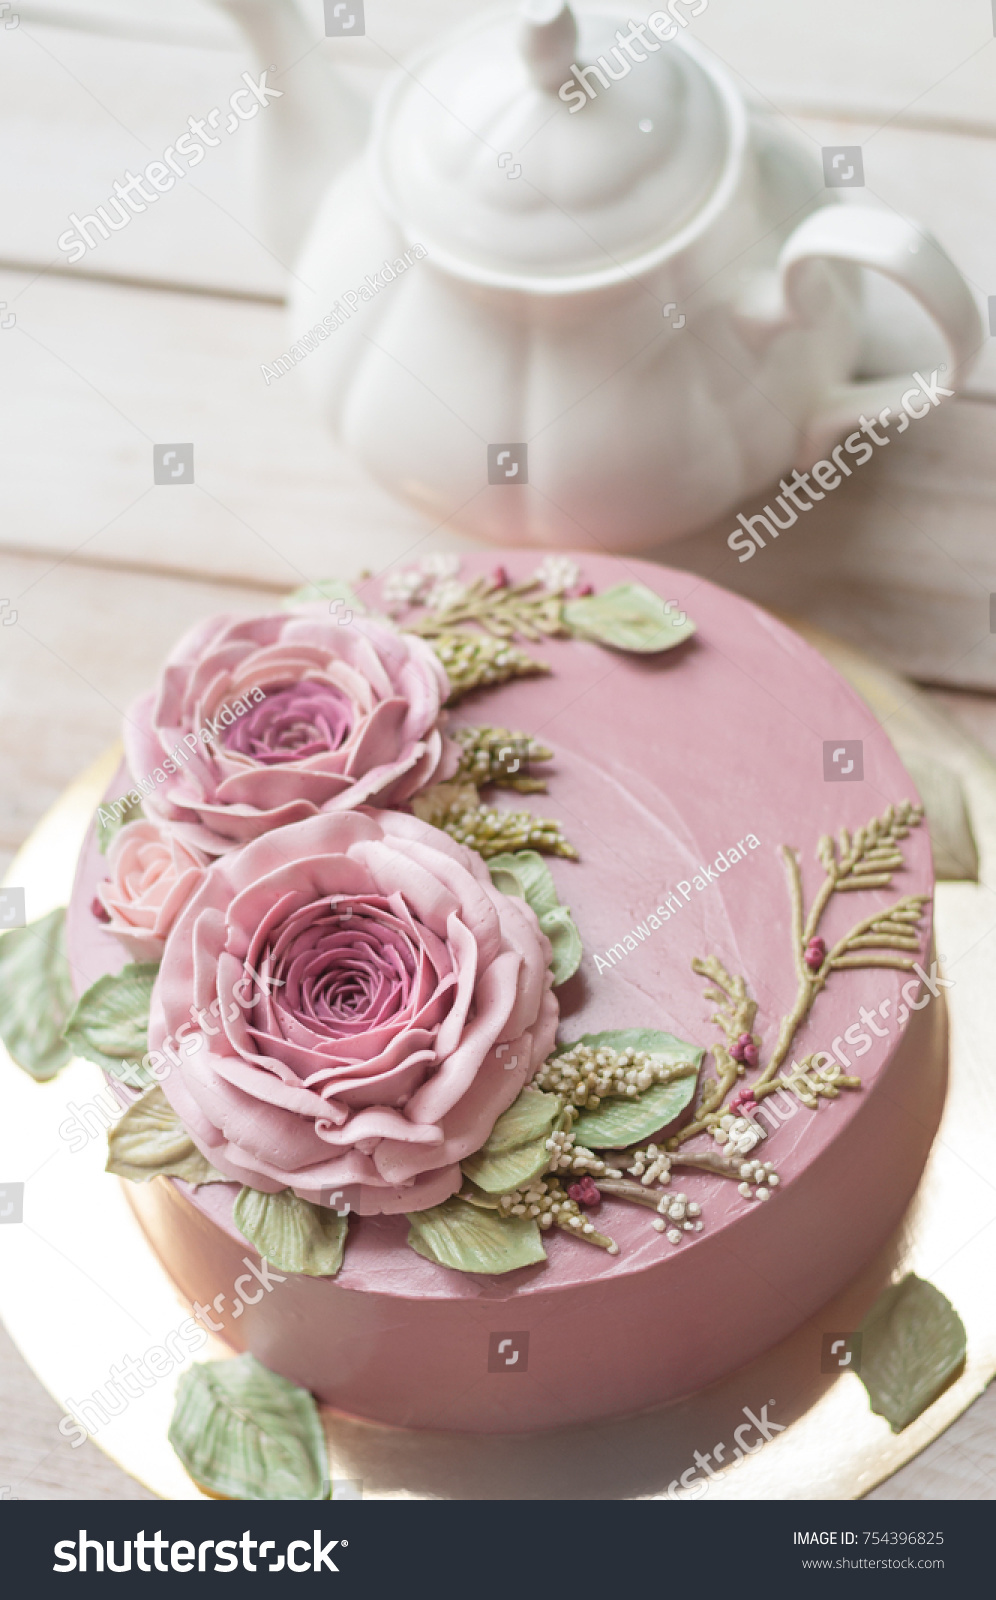 happy birthday flowers and cake